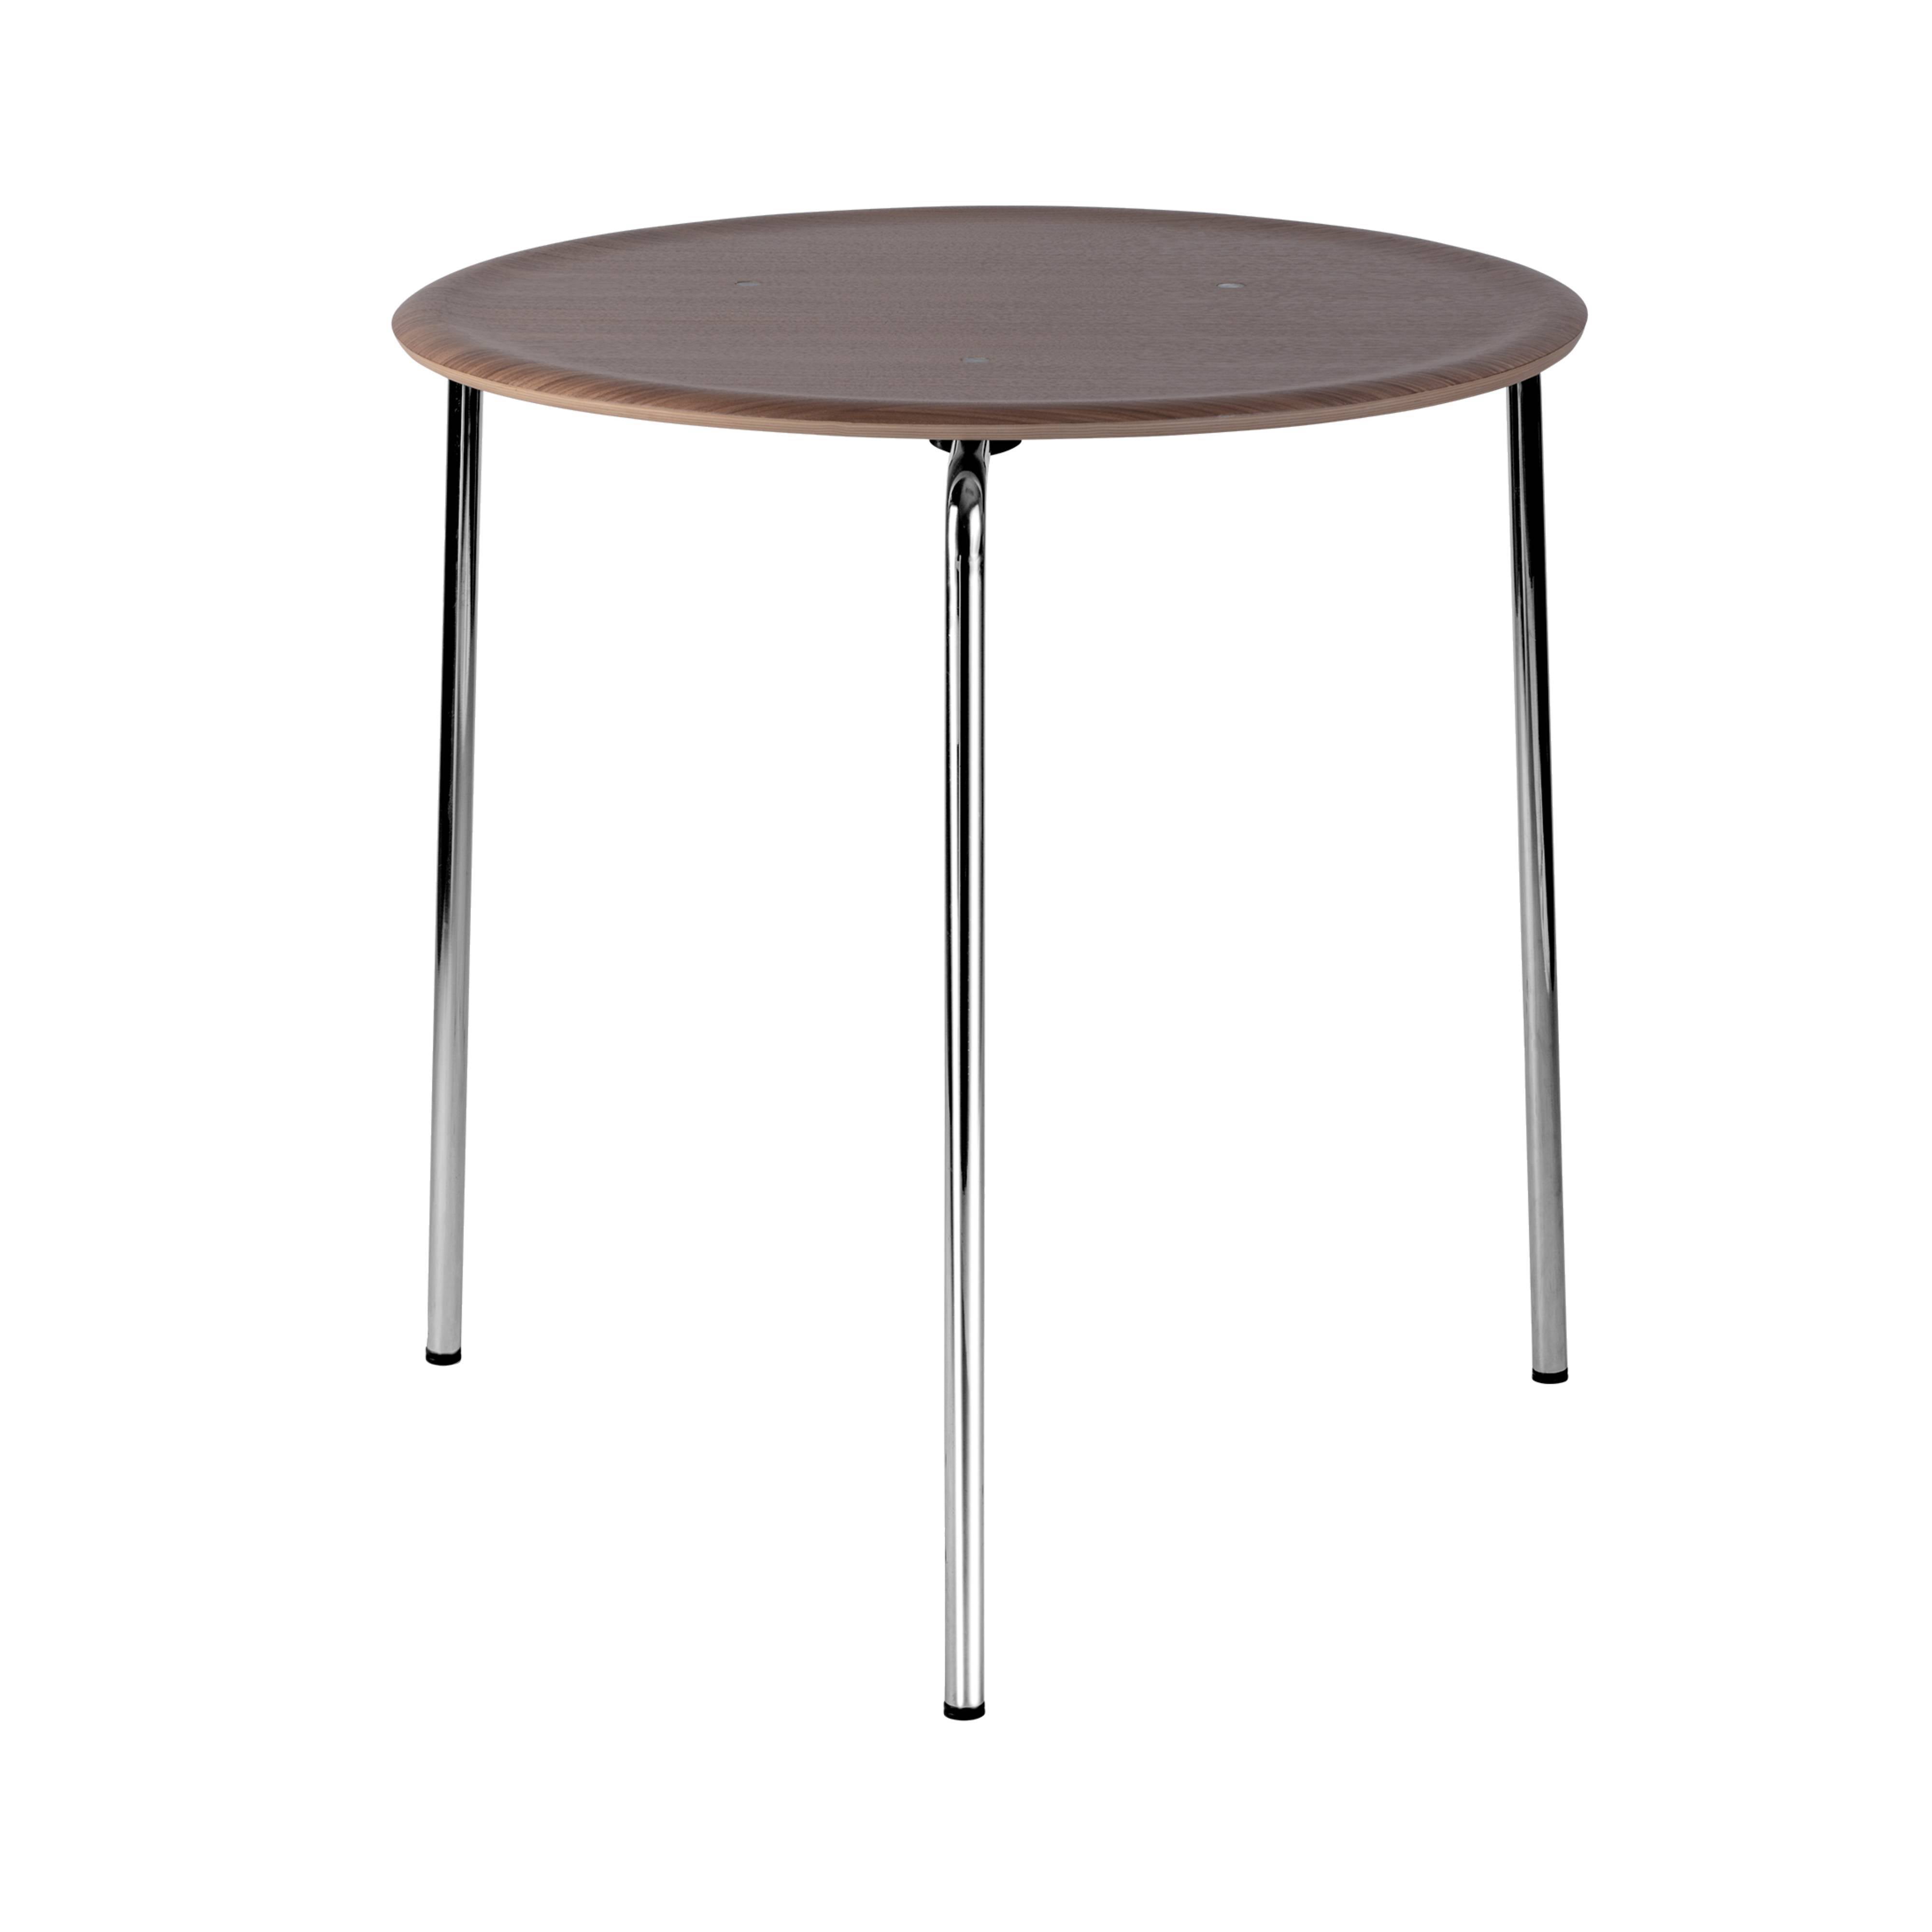 Kevi Cafe Table: Round: Large - 35.4